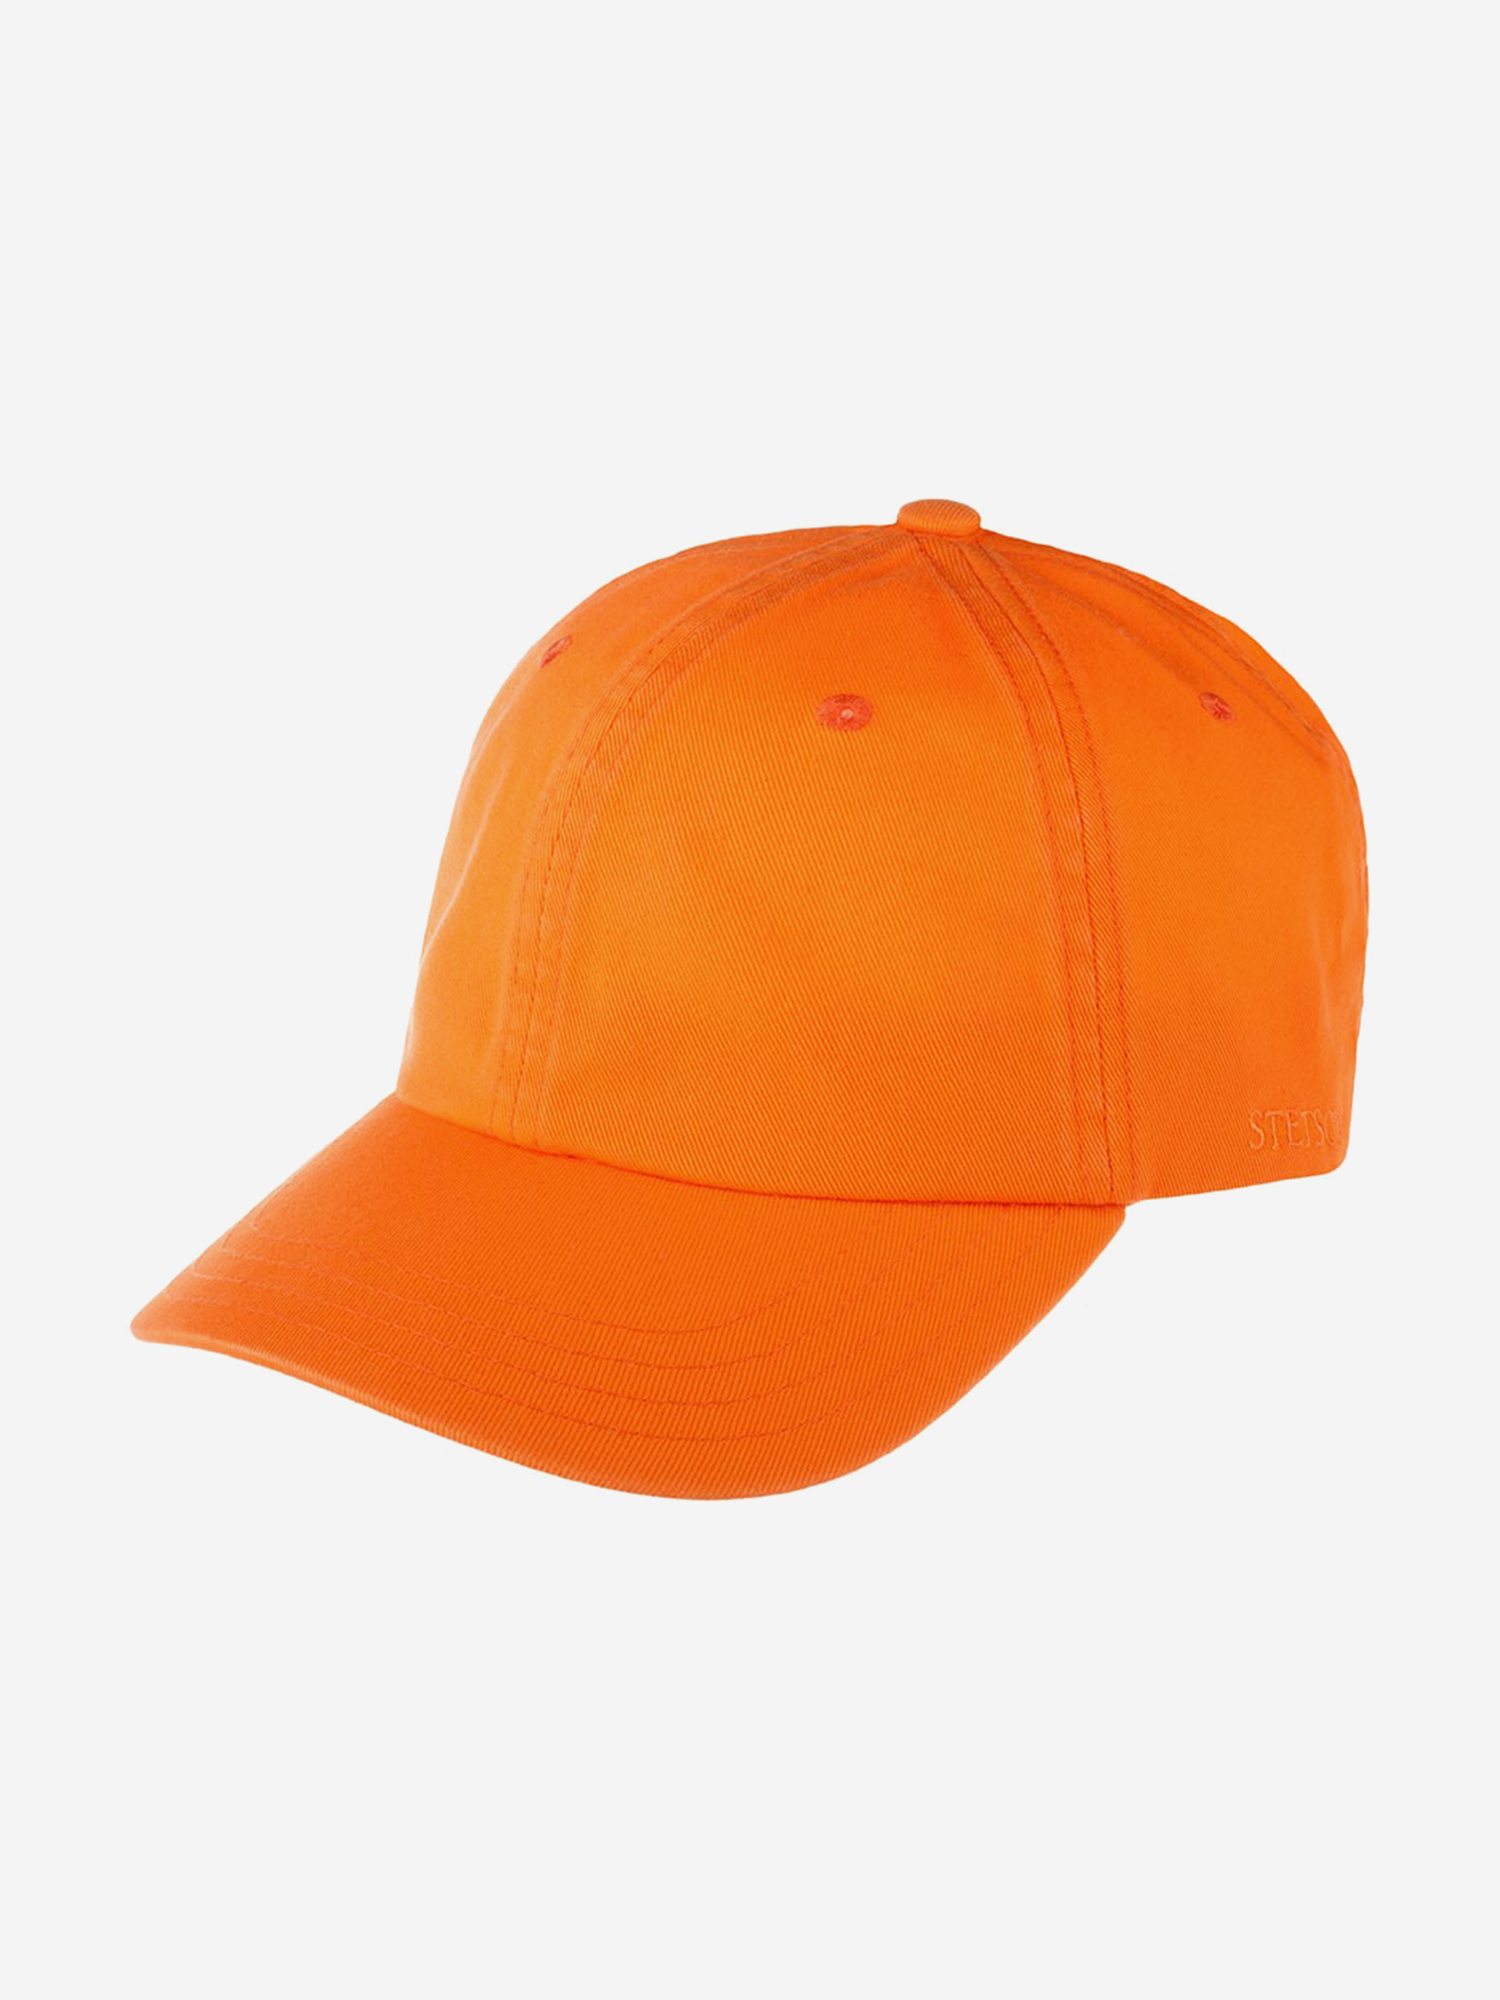 Бейсболка STETSON 7711101 BASEBALL CAP COTTON (оранжевый), Оранжевый